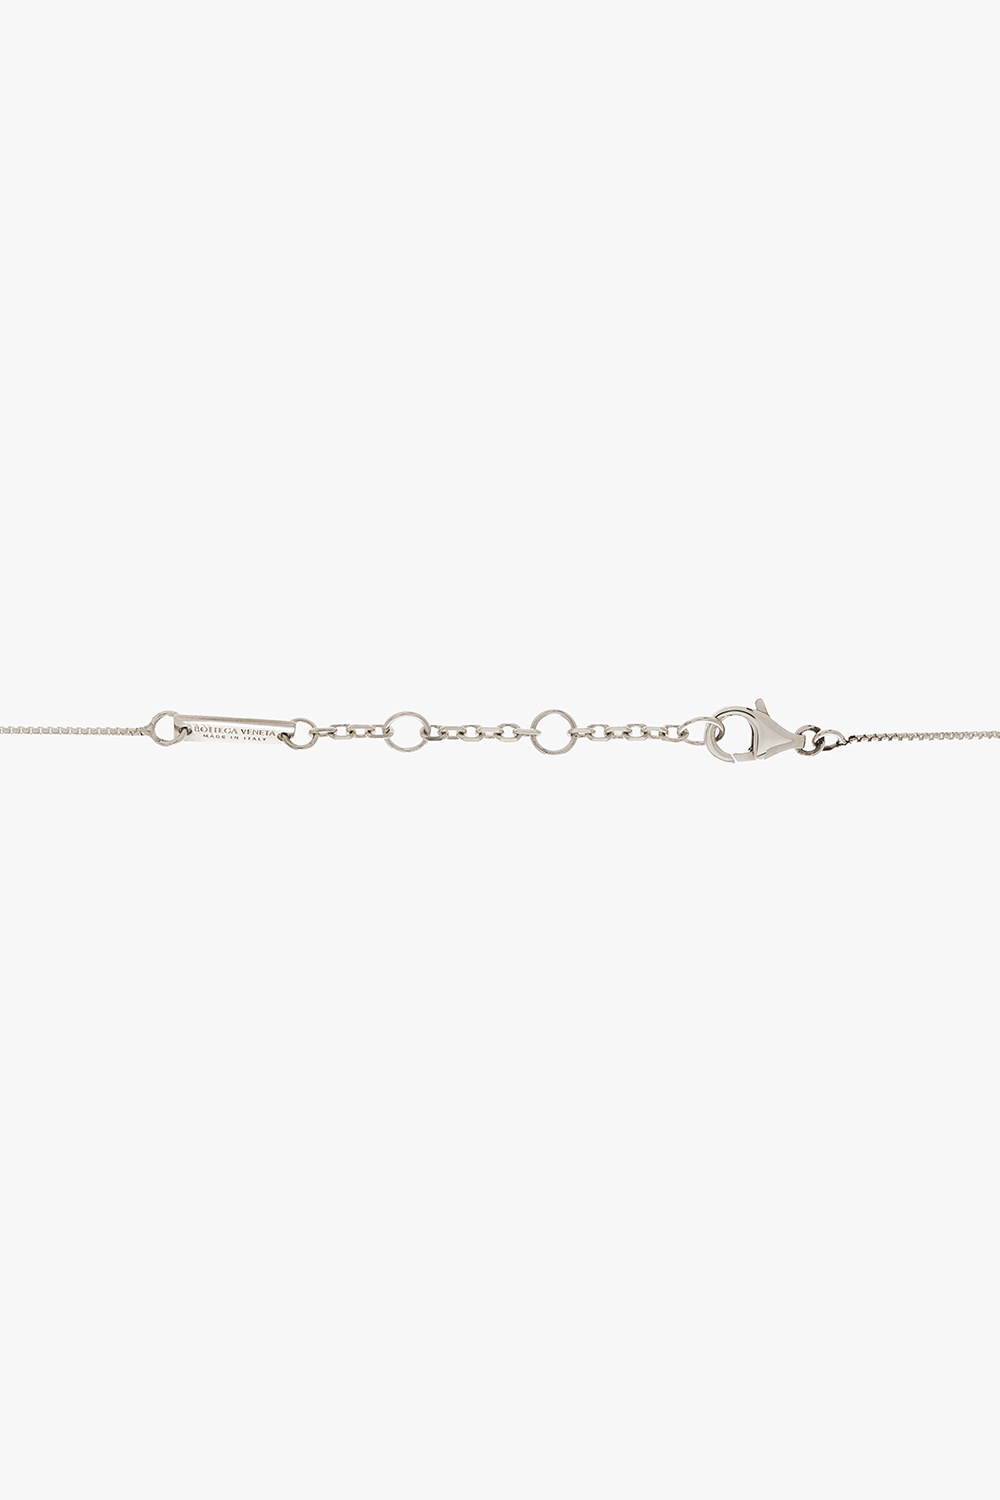 bottega chain Veneta Silver necklace